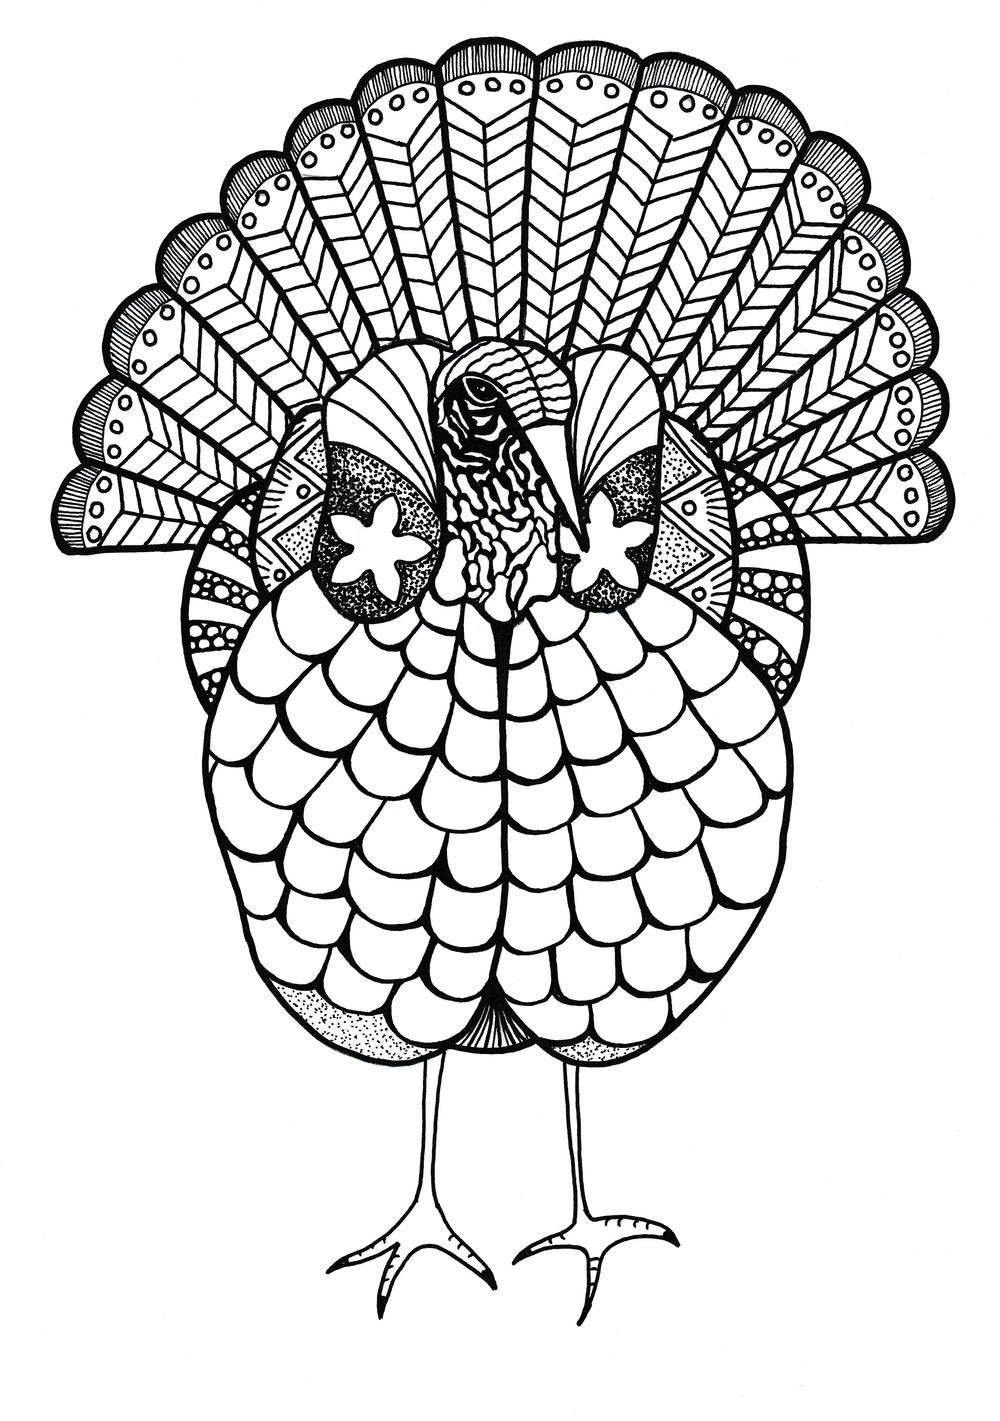 Colorful Turkey Adult Coloring Page | FaveCrafts.com